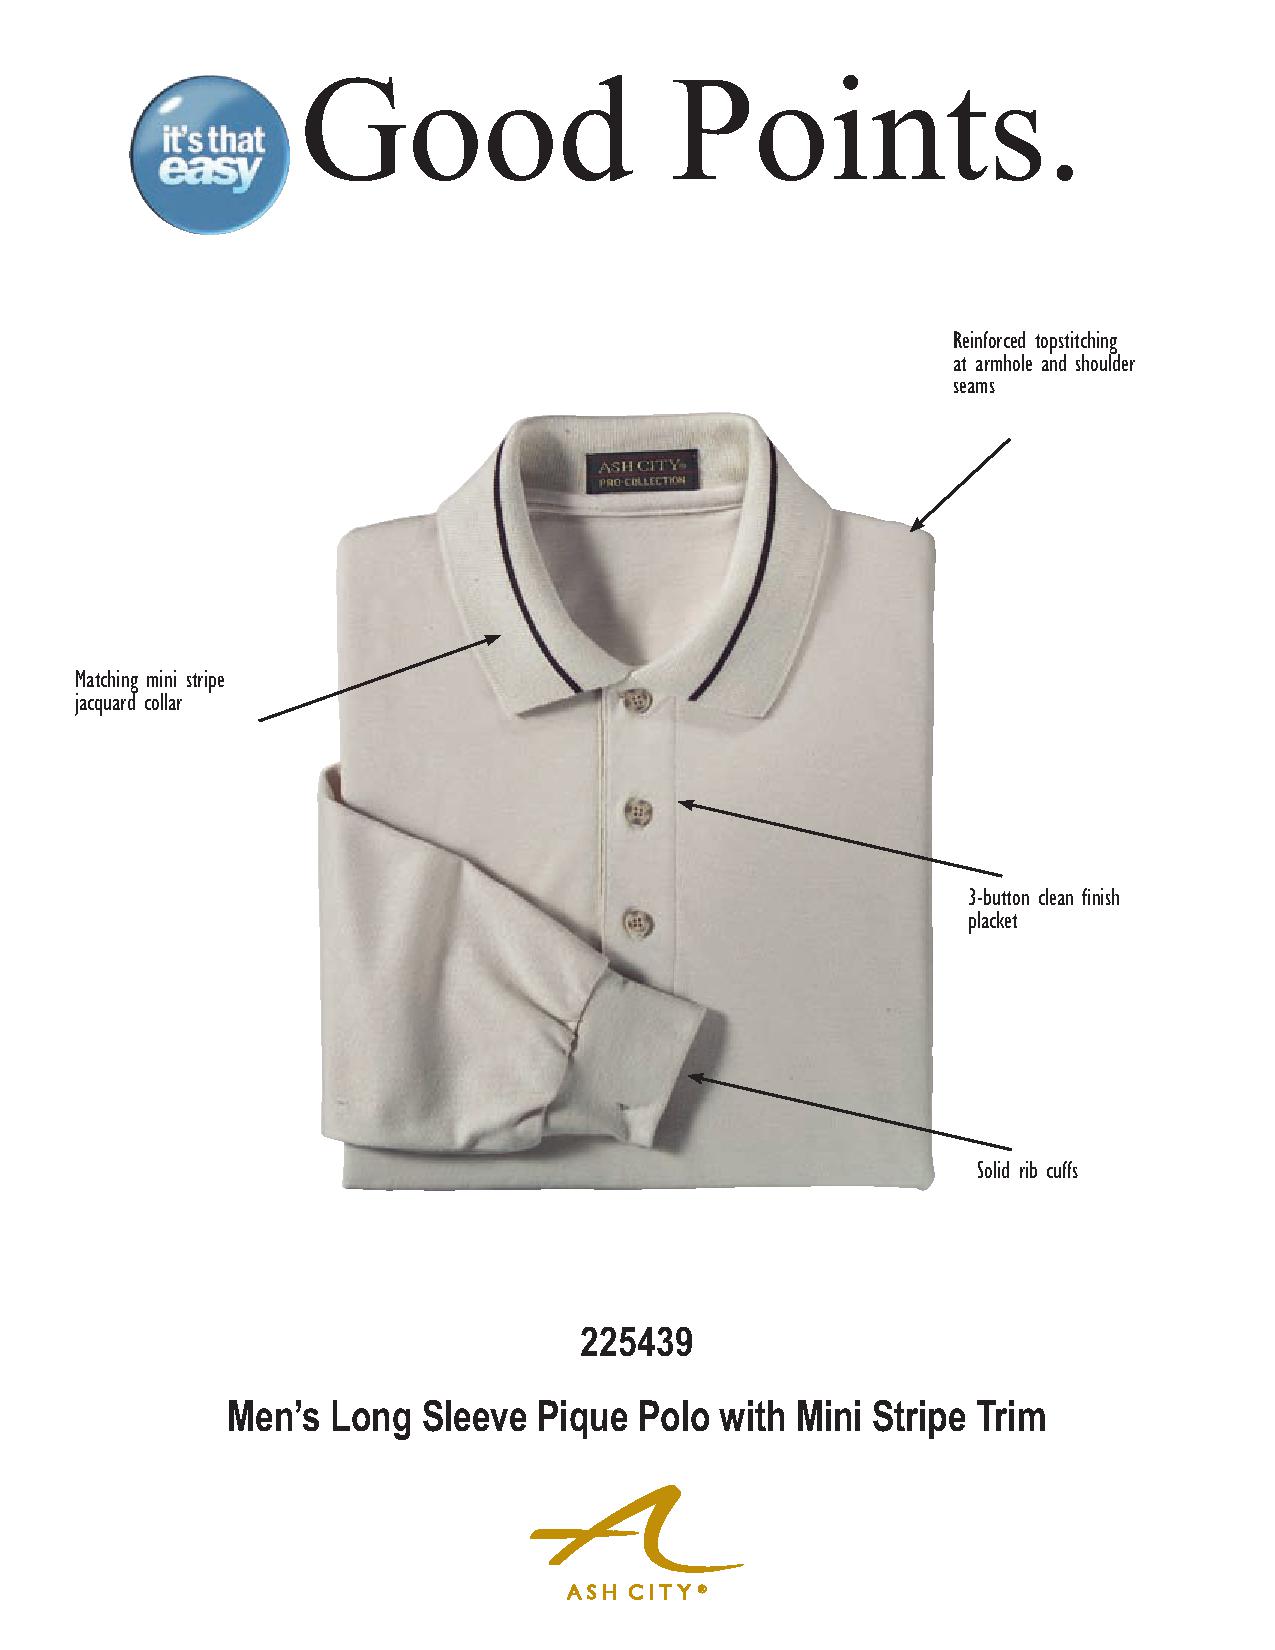 Ash City Pique 225439 - Men's Long Sleeve Pique Polo With Mini Stripe Trim